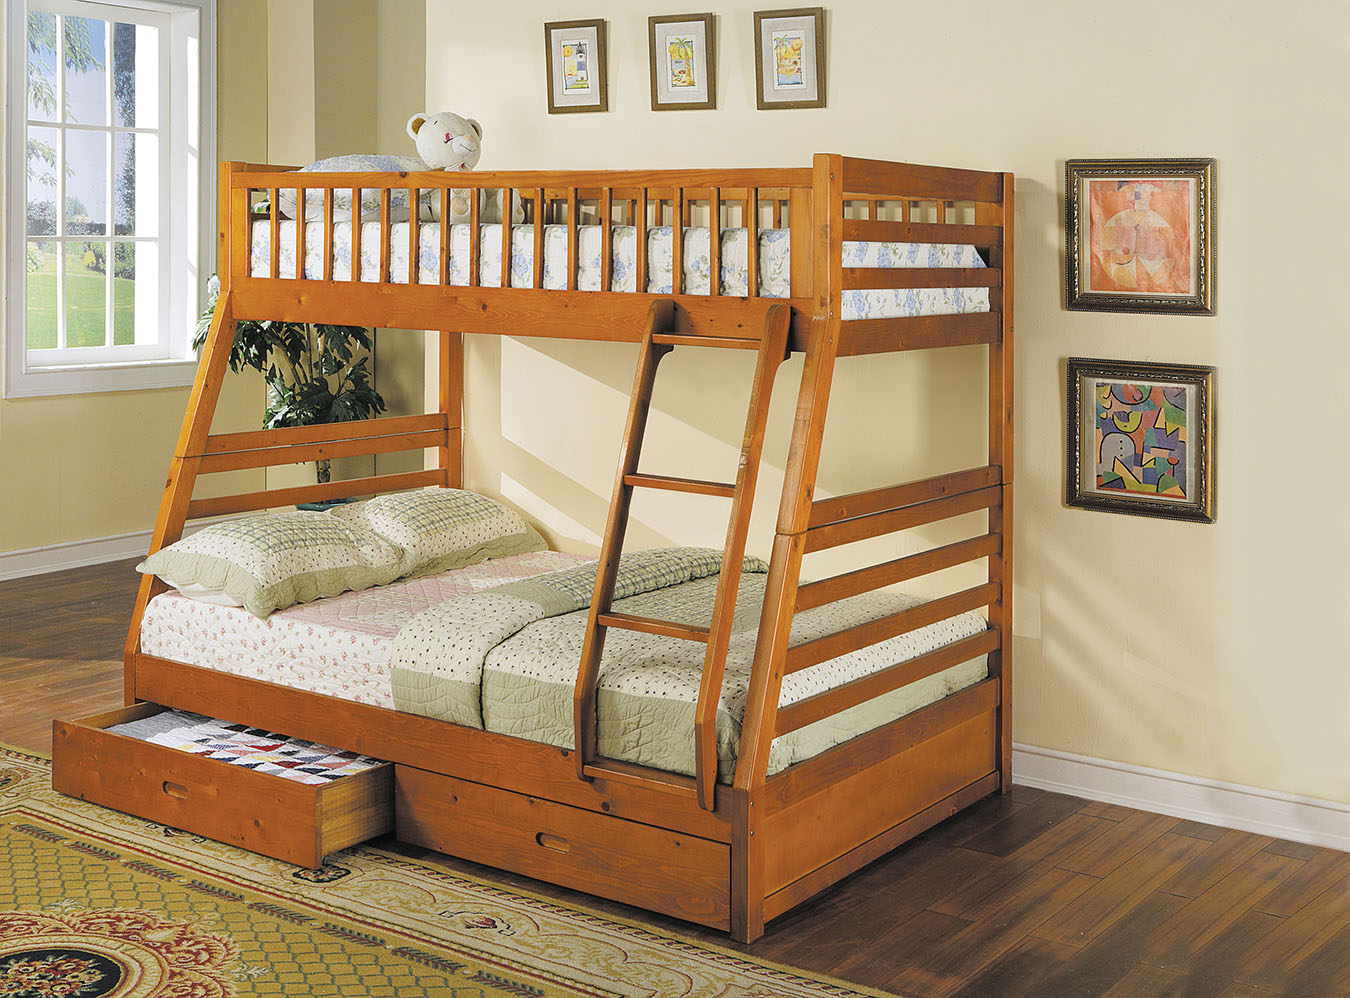 79" X 56" X 65" Honey Oak Pine Wood Bunk Bed